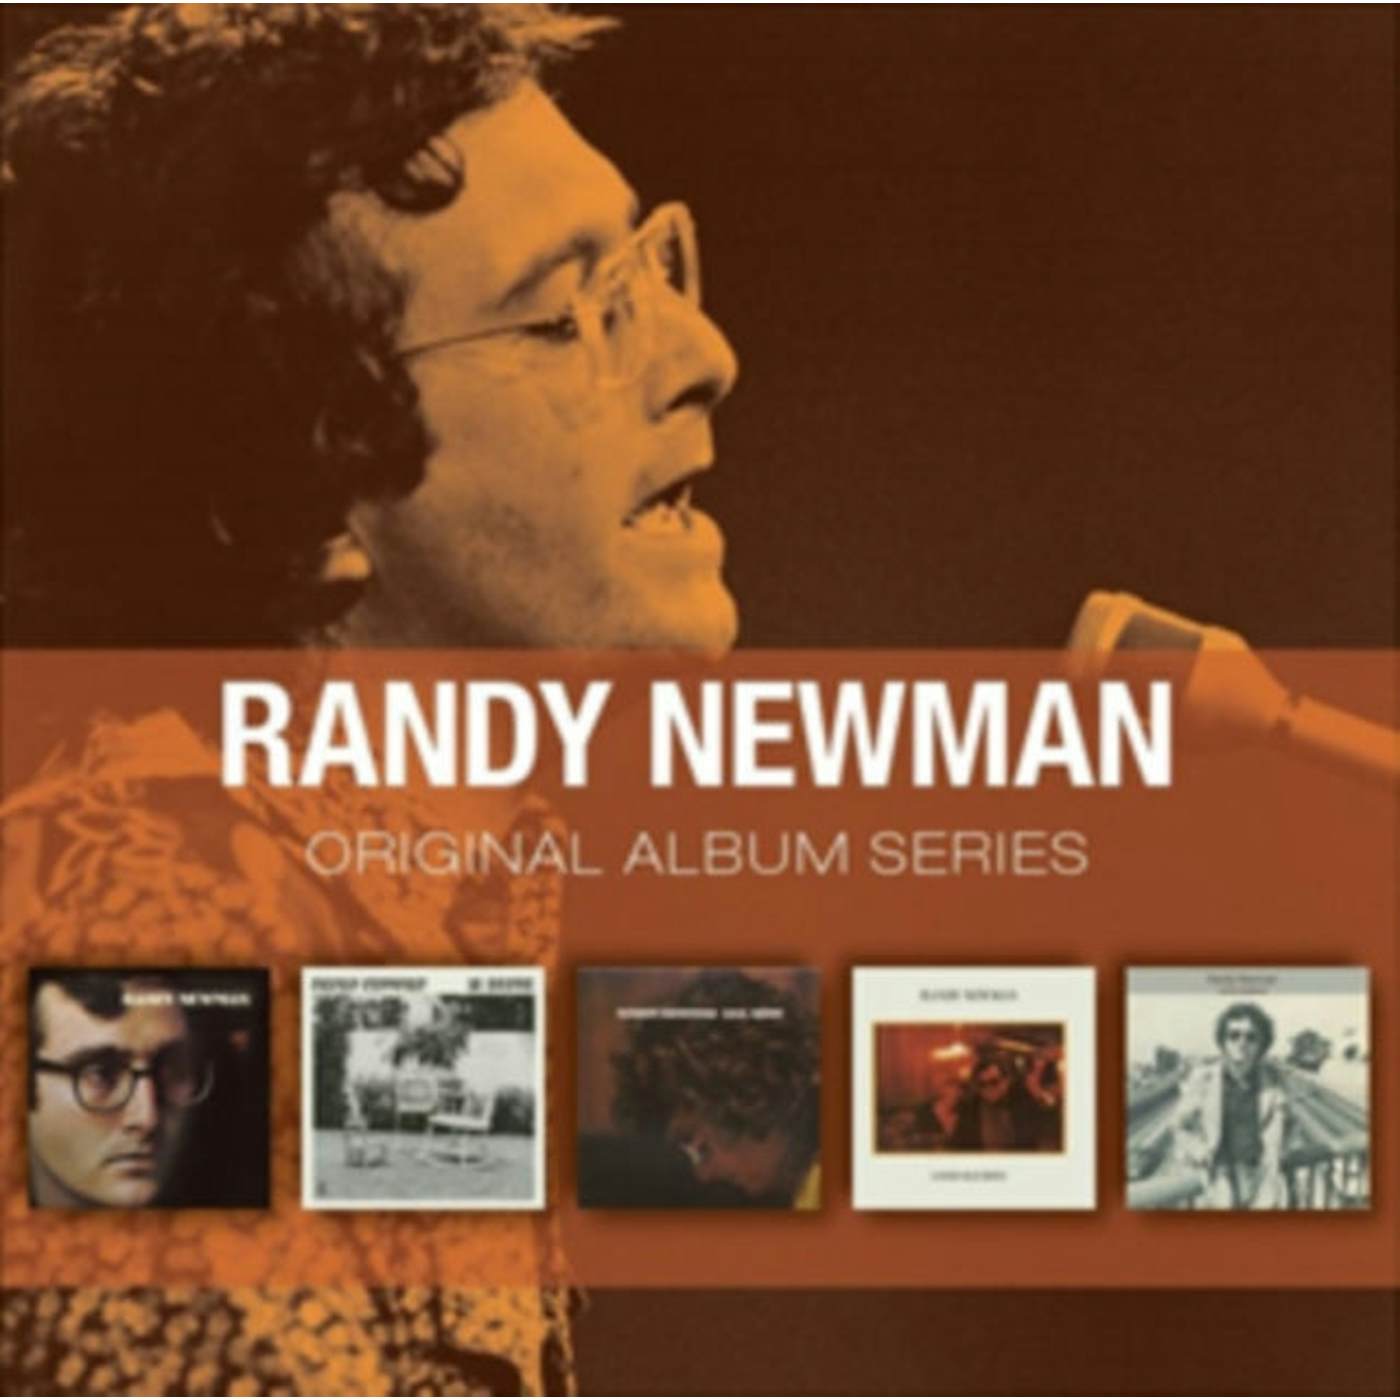 Randy Newman CD - Original Album Series